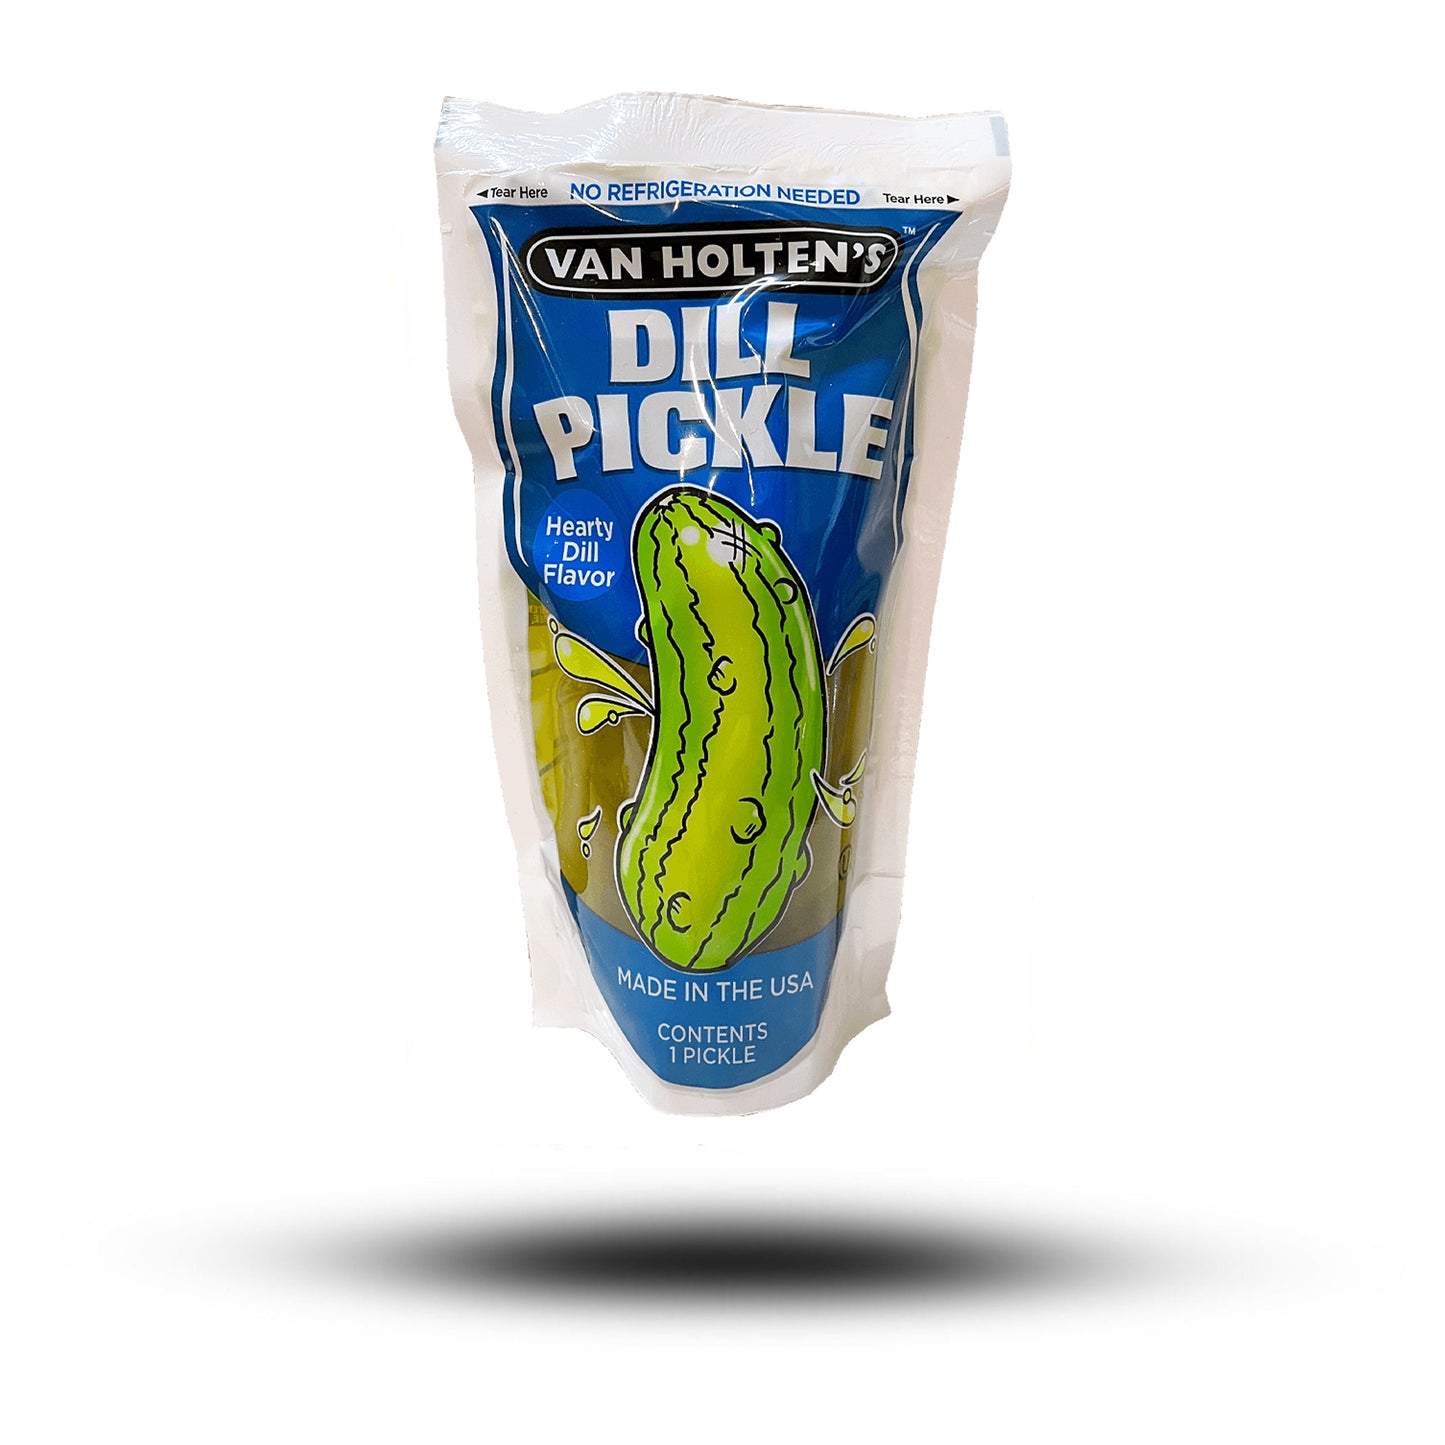 Van Holten's Dill Pickle 140g